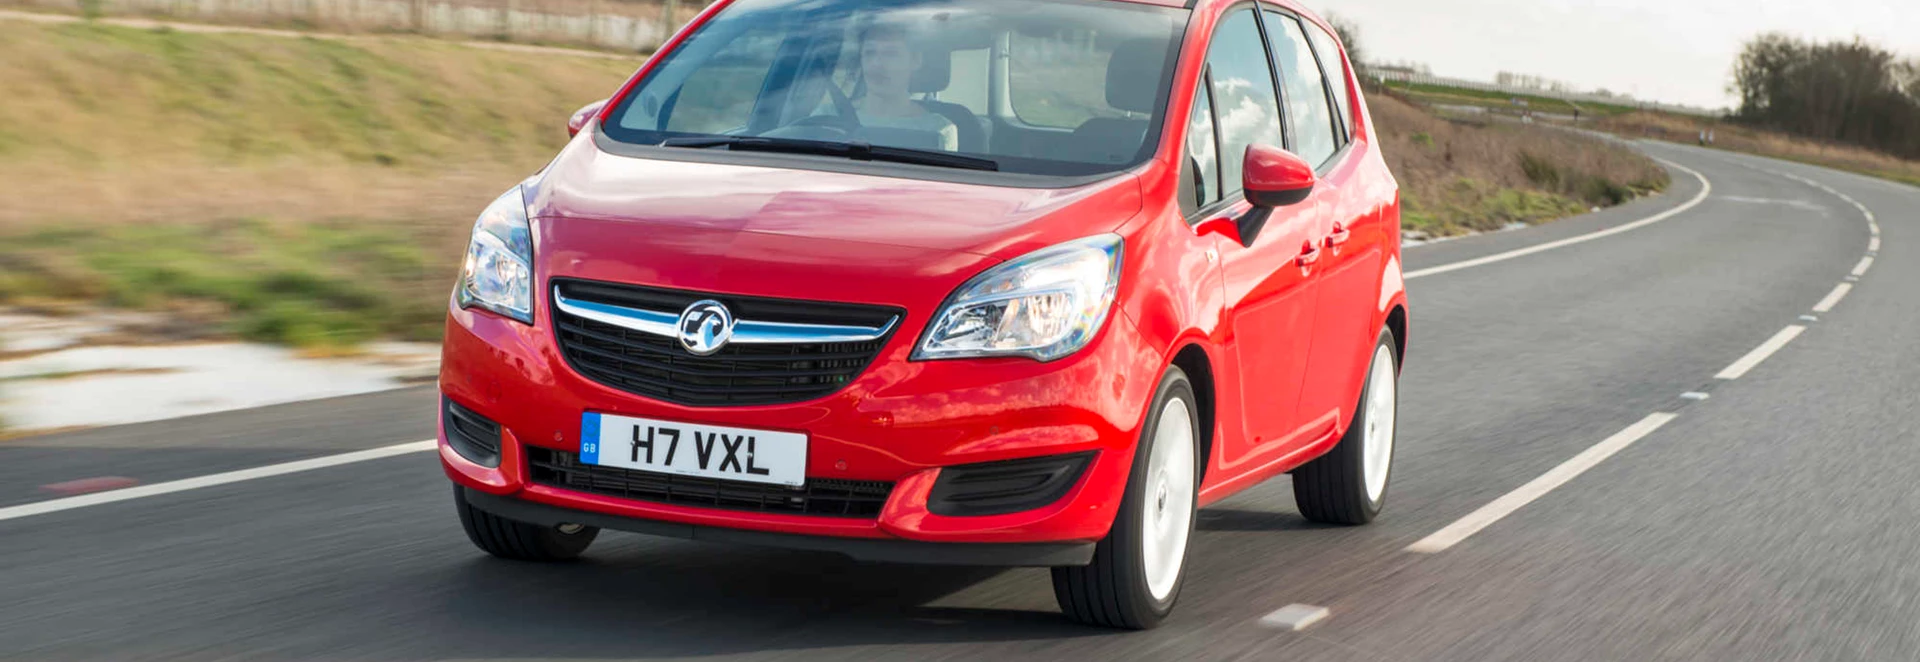 Vauxhall Meriva MPV review - Car Keys